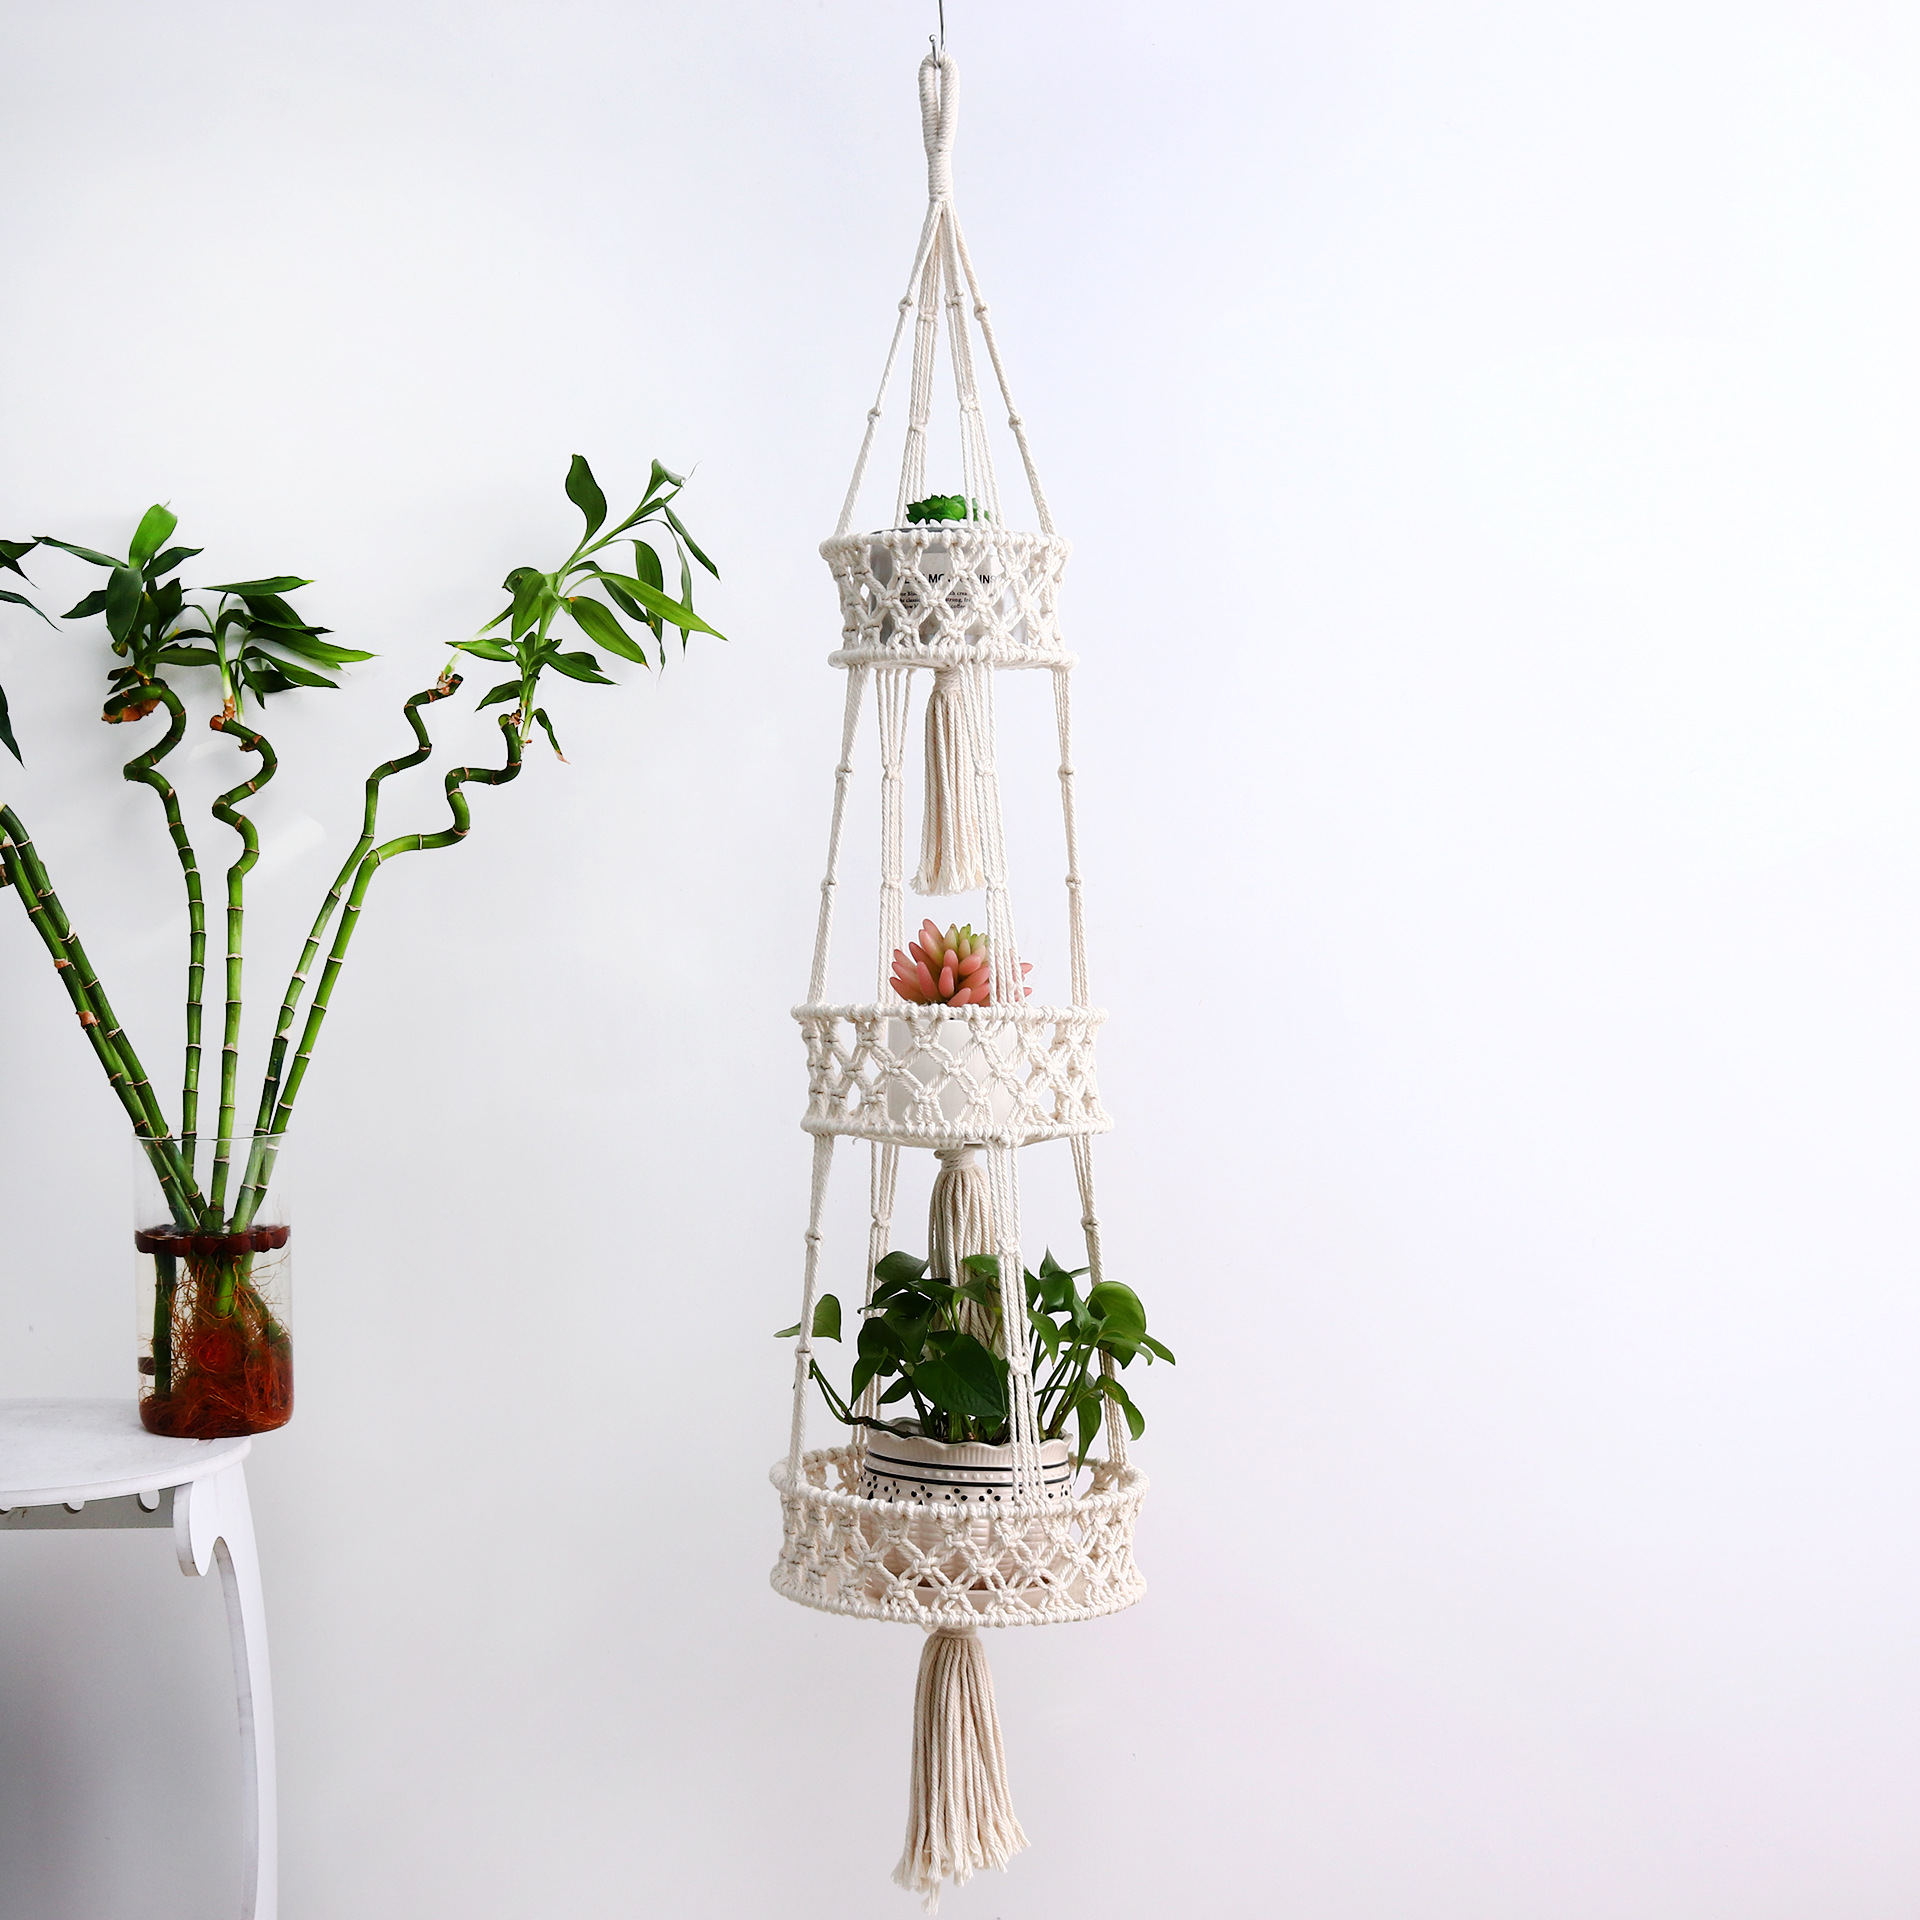 Hand-Woven Cotton Cord Three-Layer Flower Basket Decorative Hanging Basket Folding Storage Hanging Basket Wall Basket Flower Pot